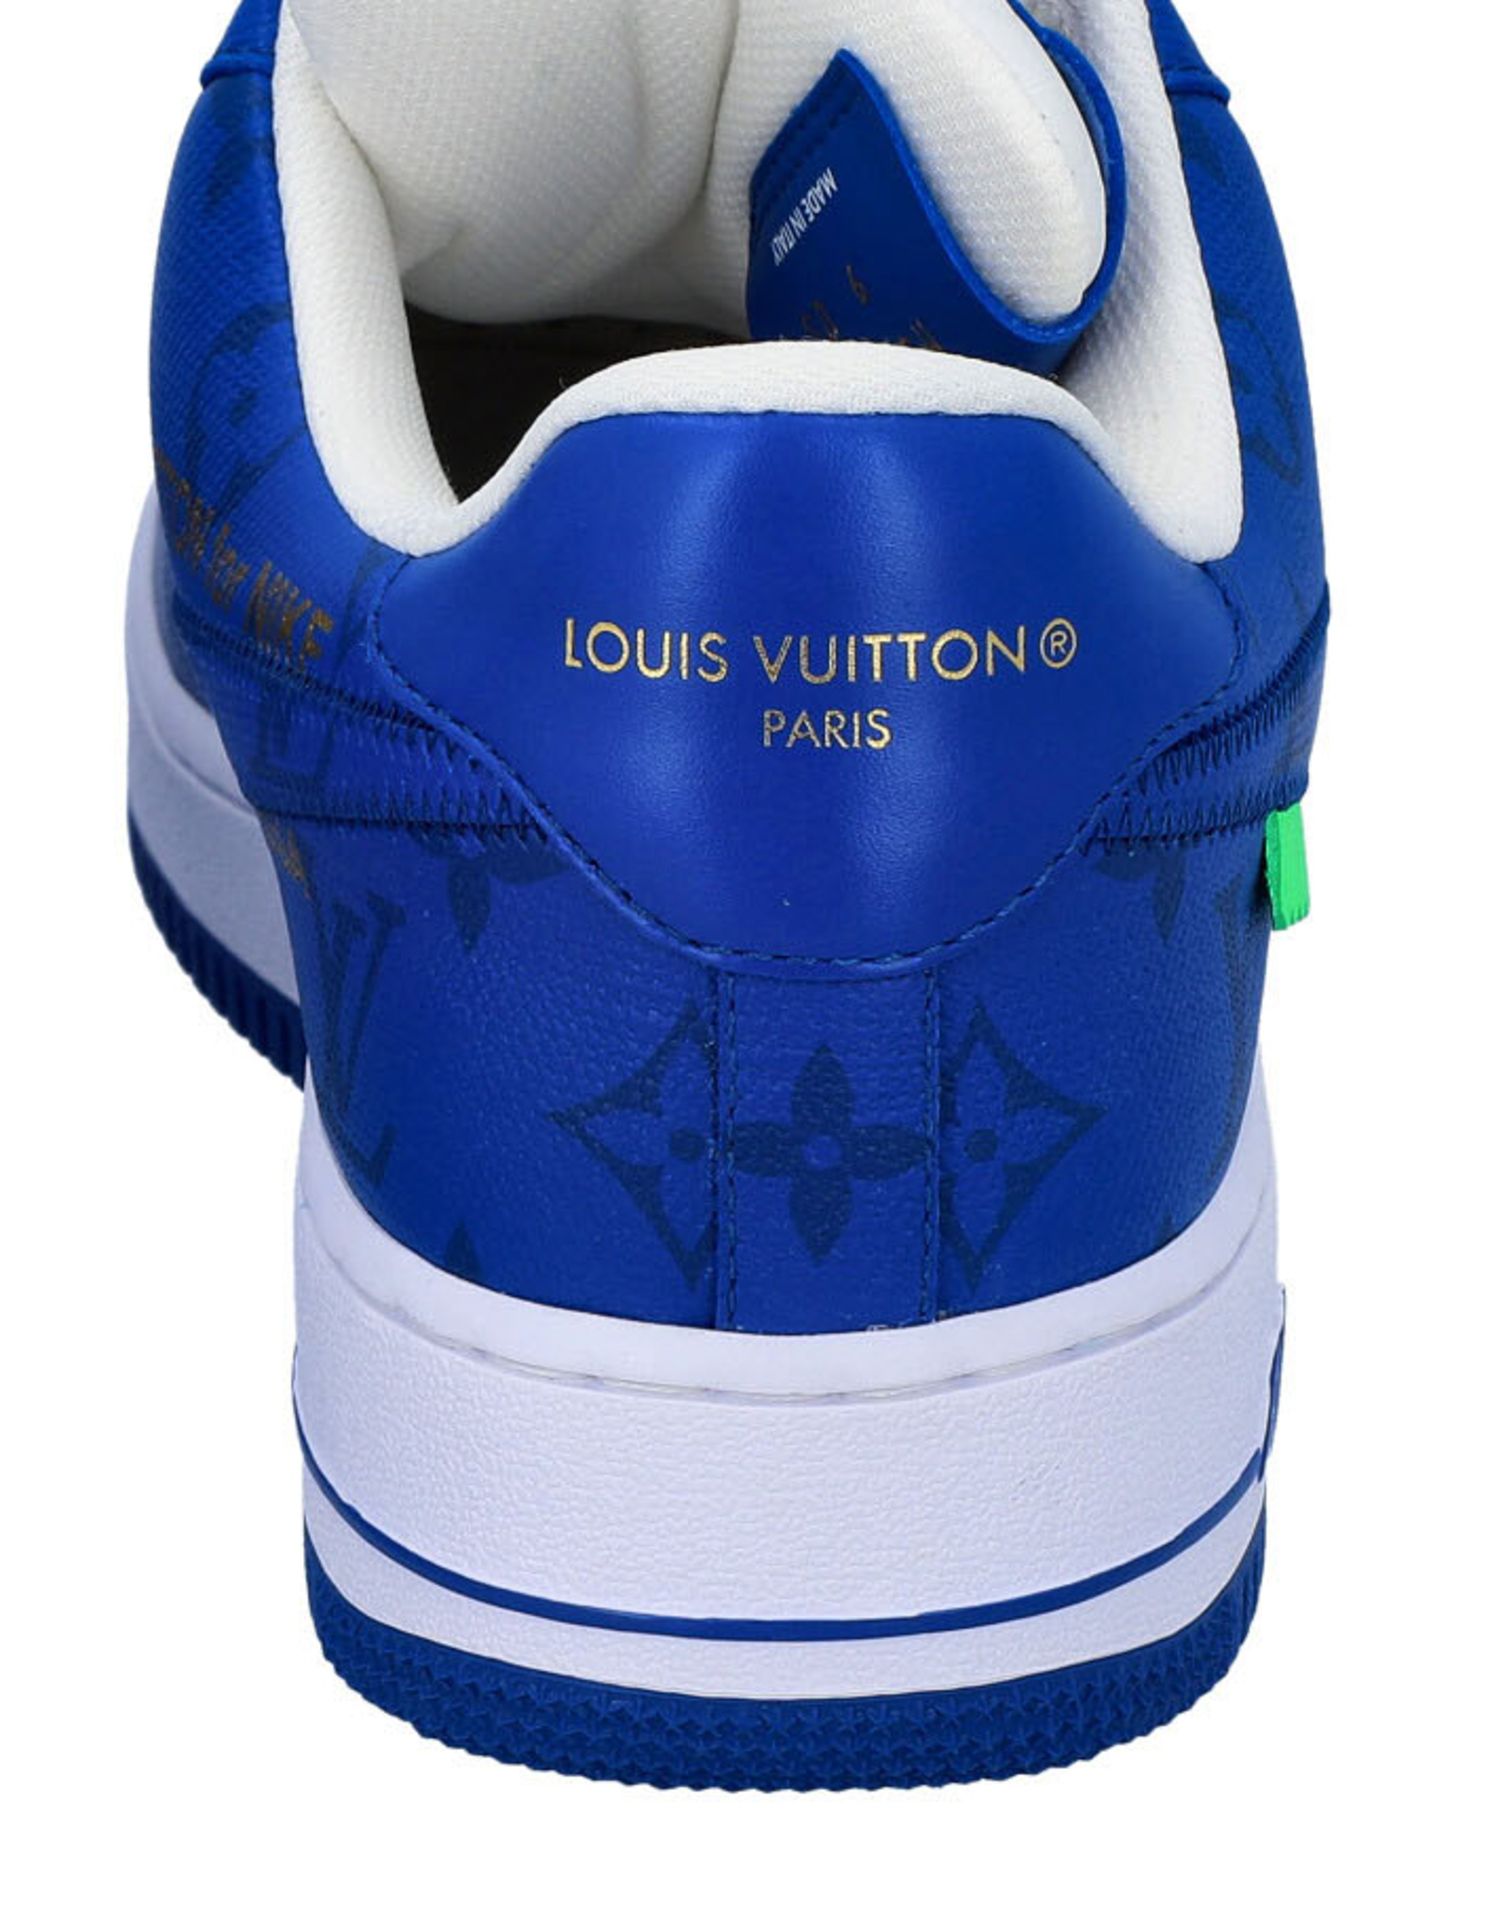 Louis Vuitton. - Image 3 of 4